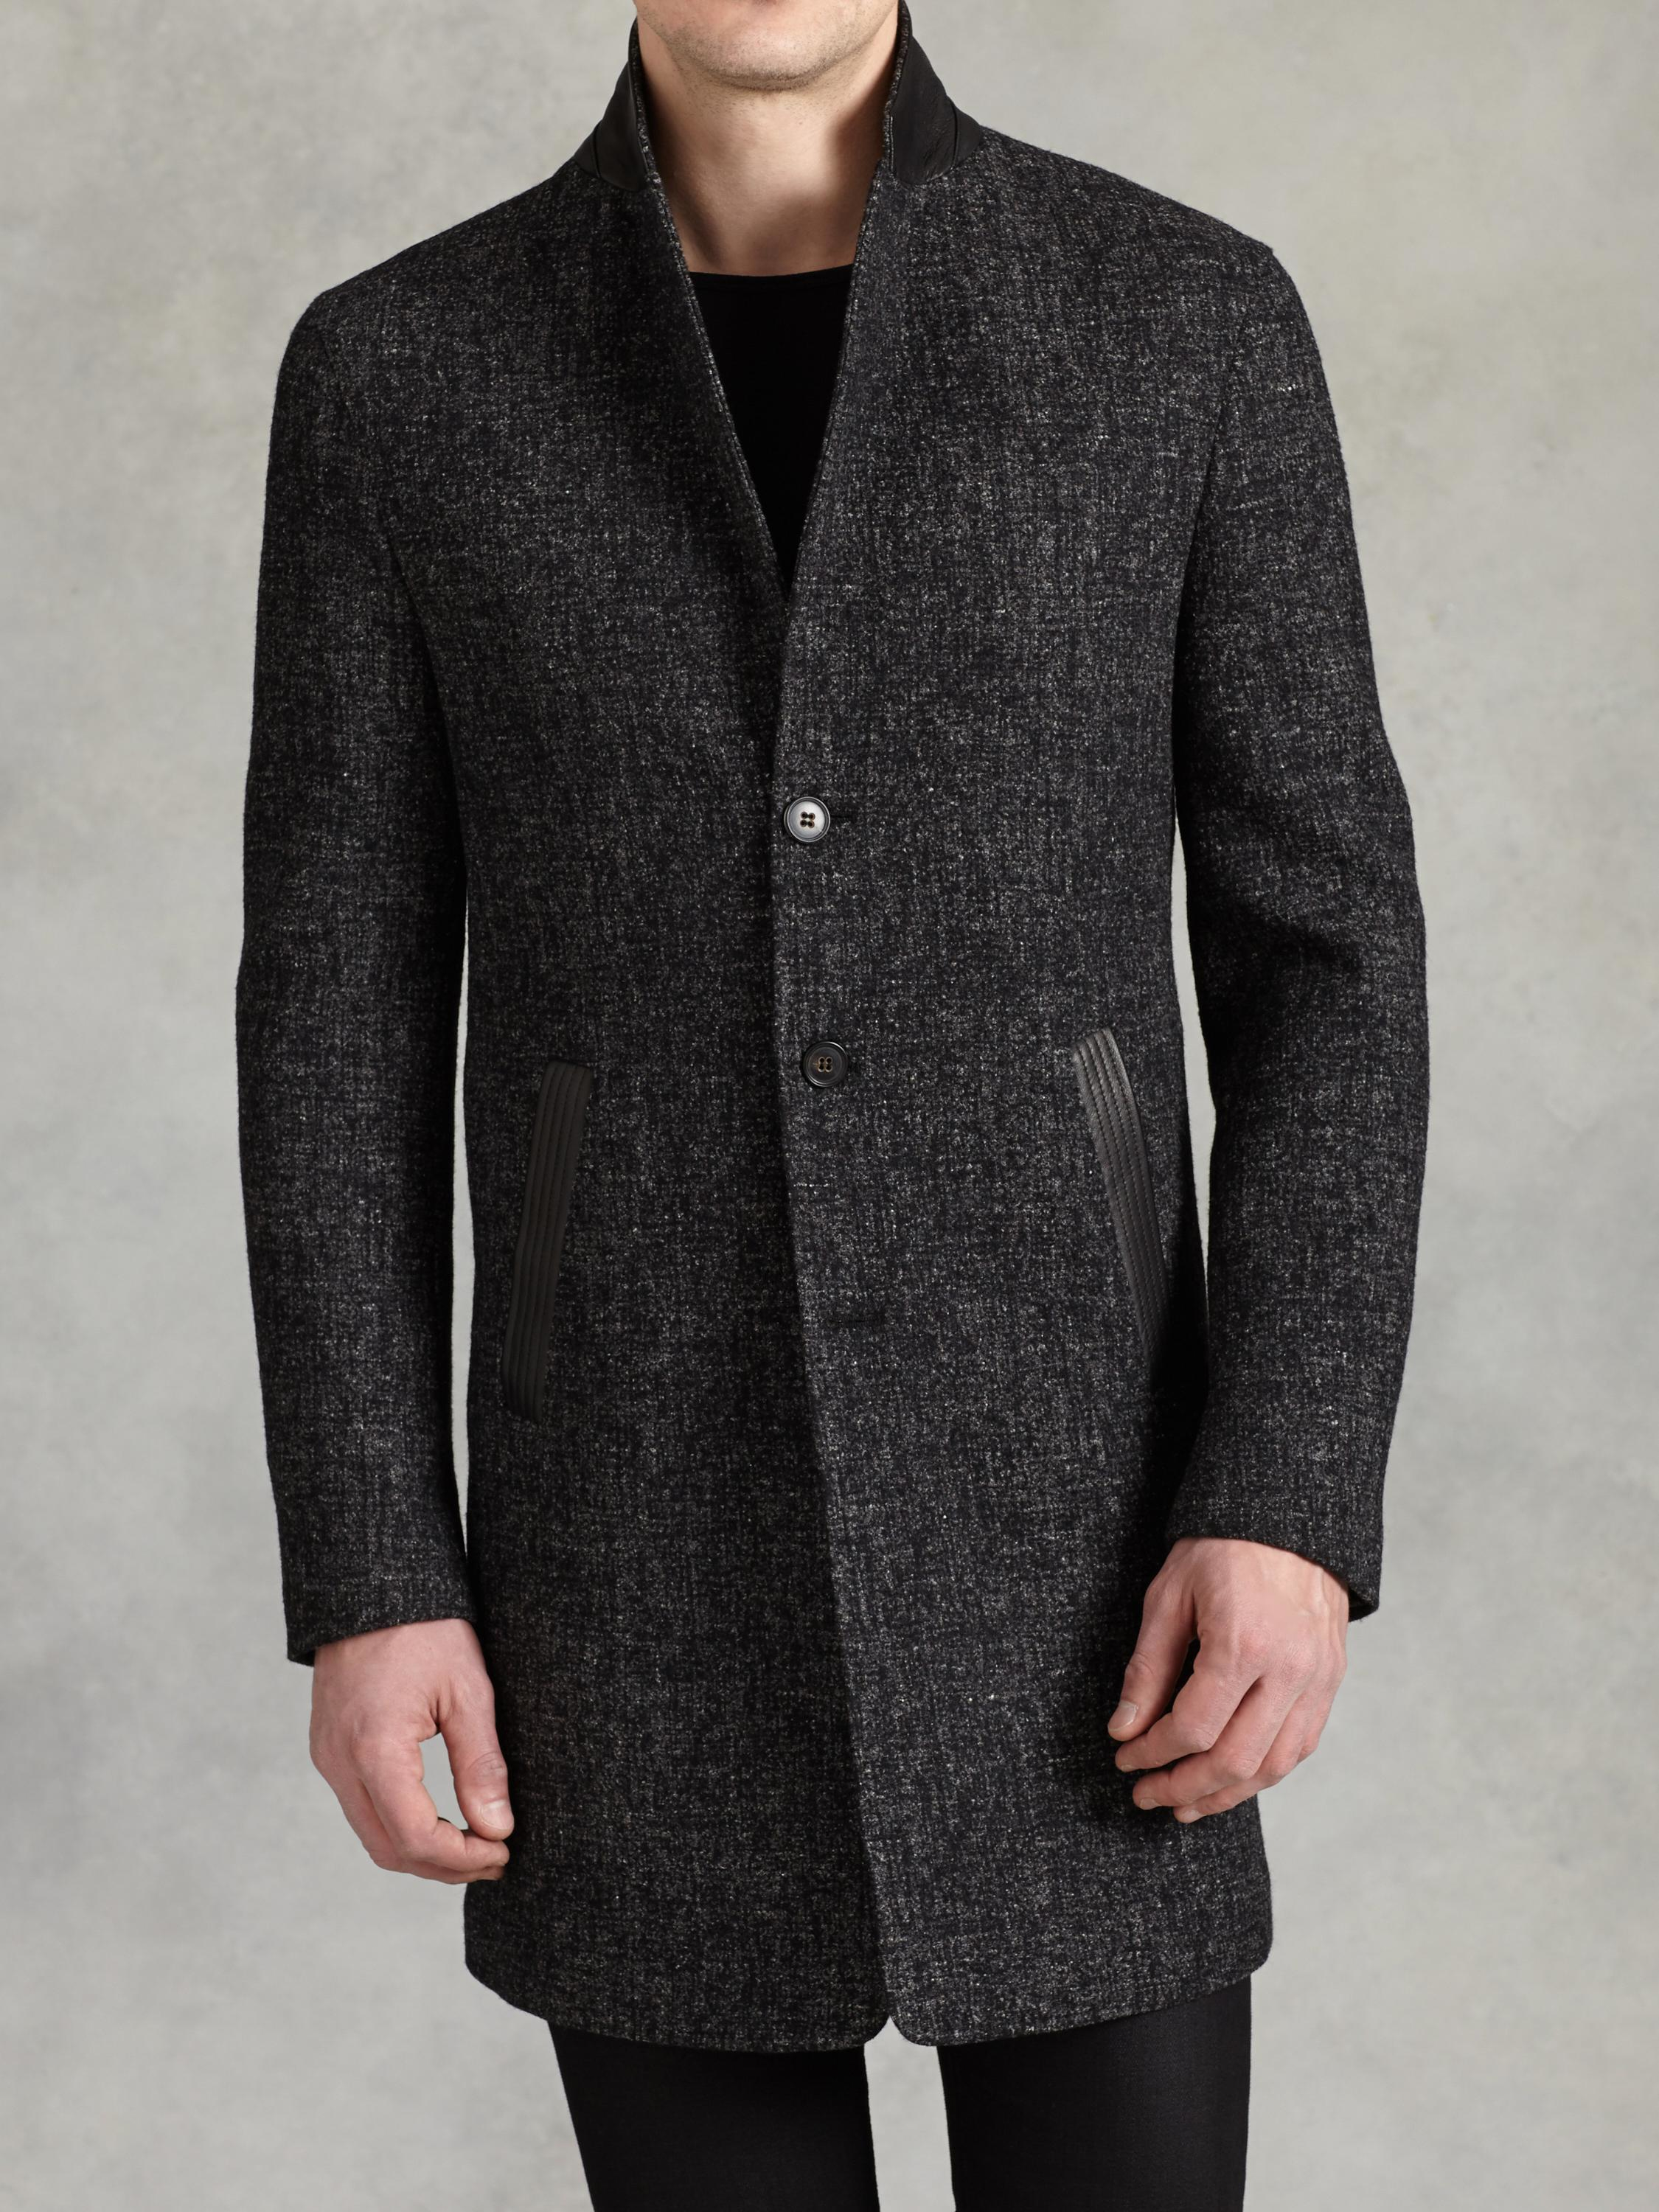 John Varvatos 3/4 Lngth Coat in Gray for Men - Lyst